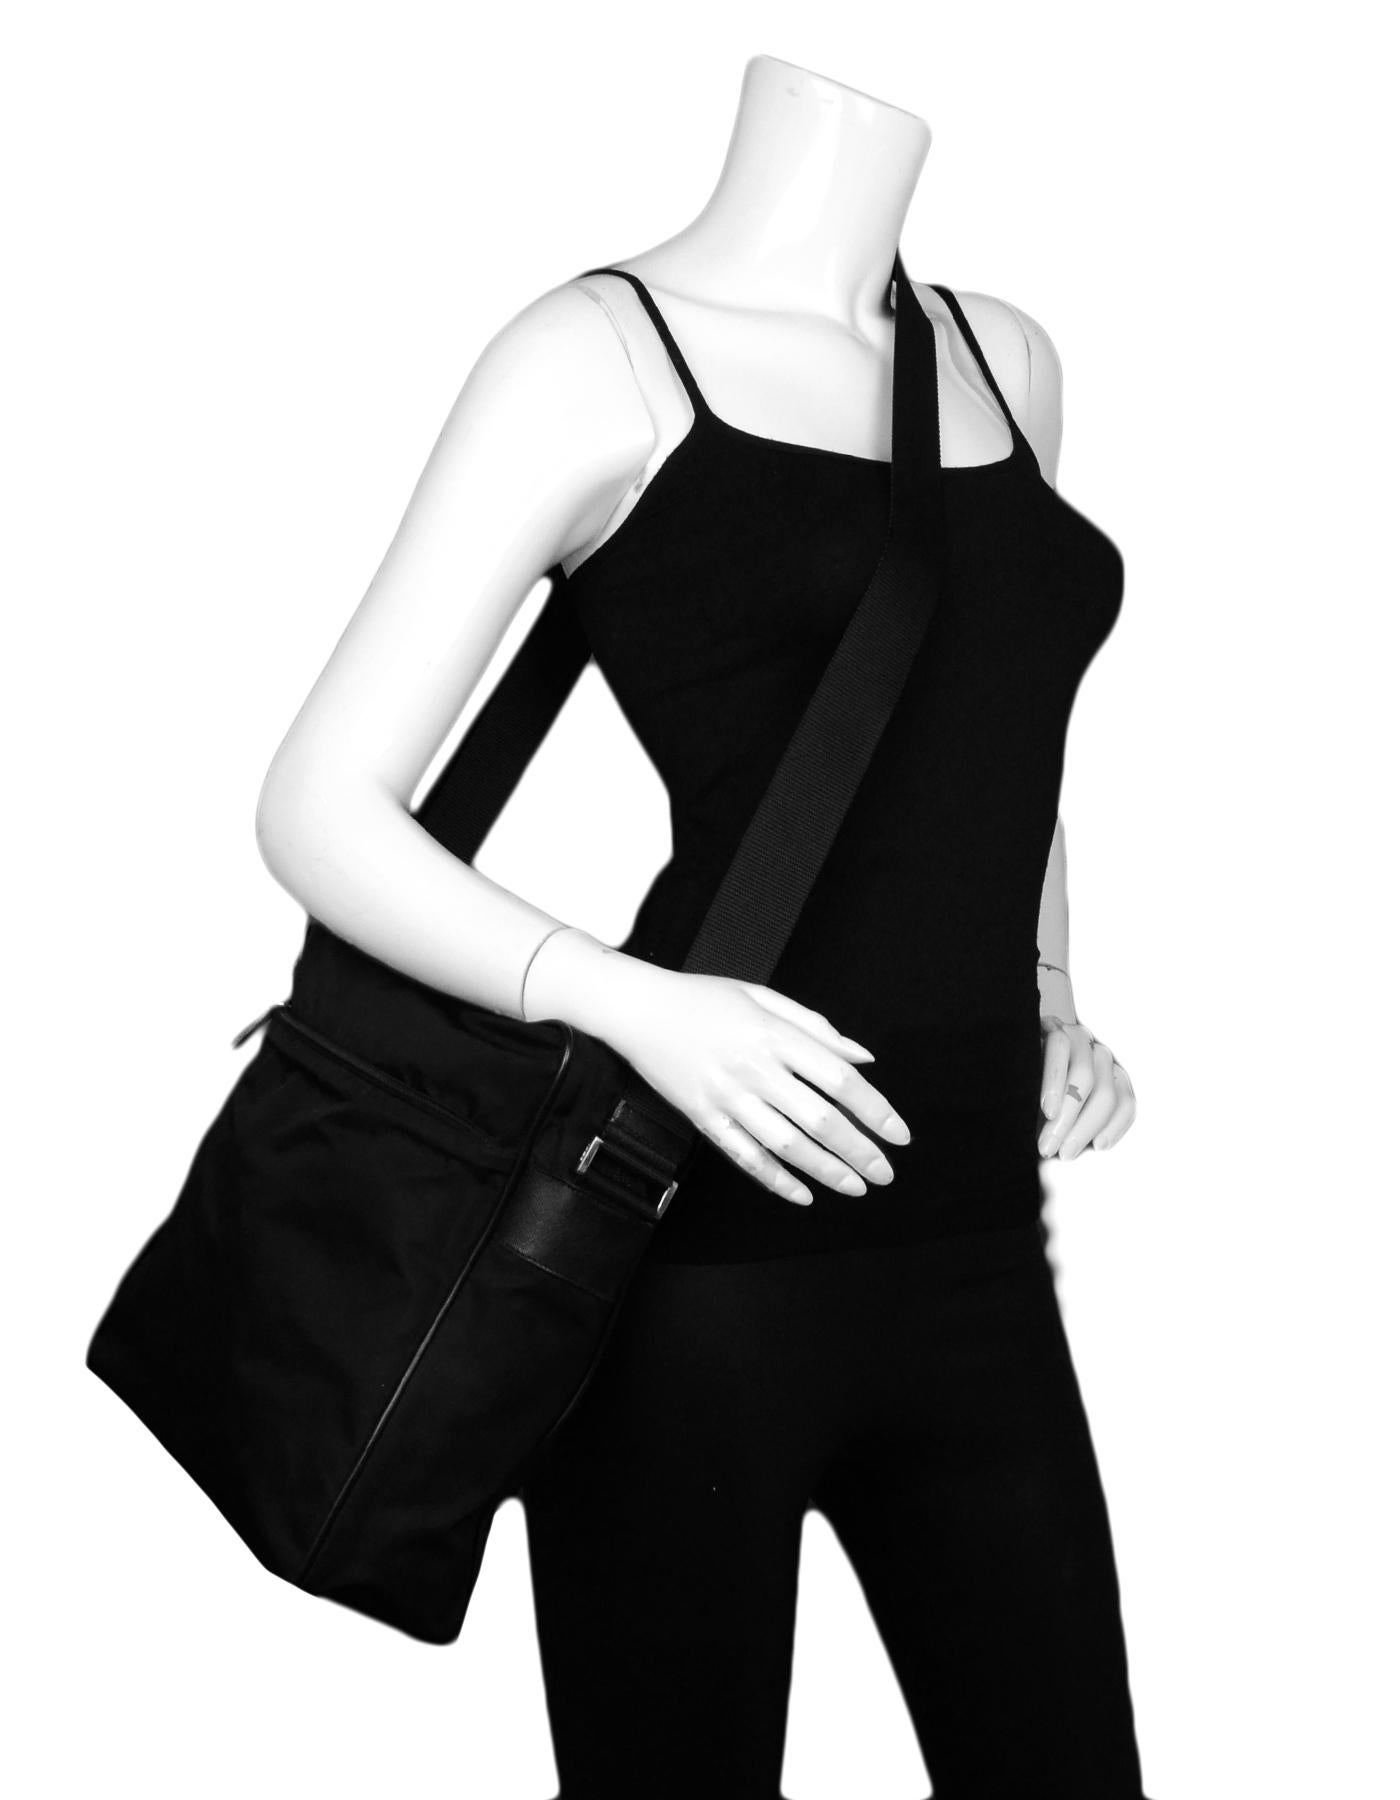 Prada Black Nylon Zip Top Messenger Bag

Made In: Italy
Color: Black 
Hardware: Silvertone 
Materials: Nylon
Lining: Prada fine textile
Closure/Opening: Top zip
Exterior Pockets: One zip pocket
Interior Pockets: One zip pocket
Exterior Condition: